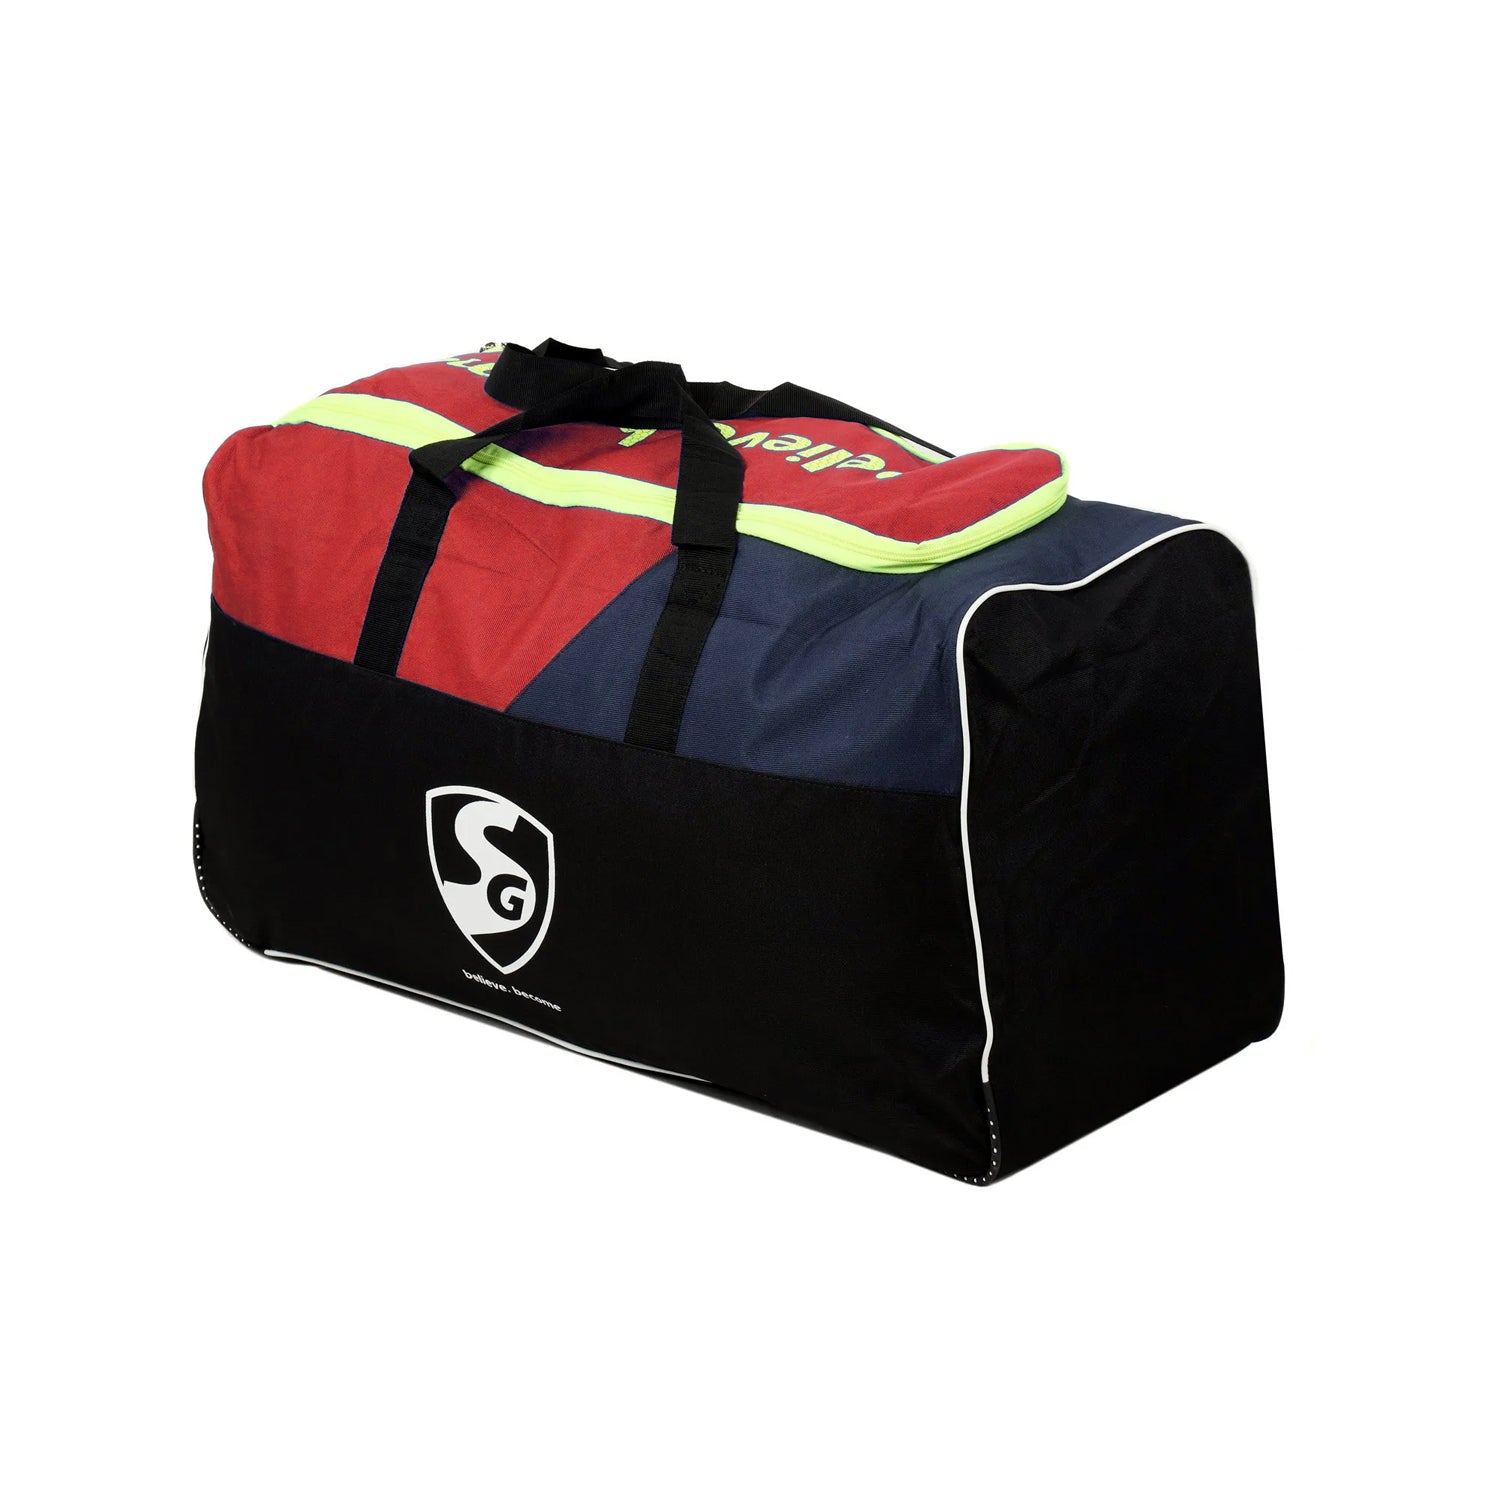 SG Kitpak Cricket Kitbag, Black/Red - Best Price online Prokicksports.com